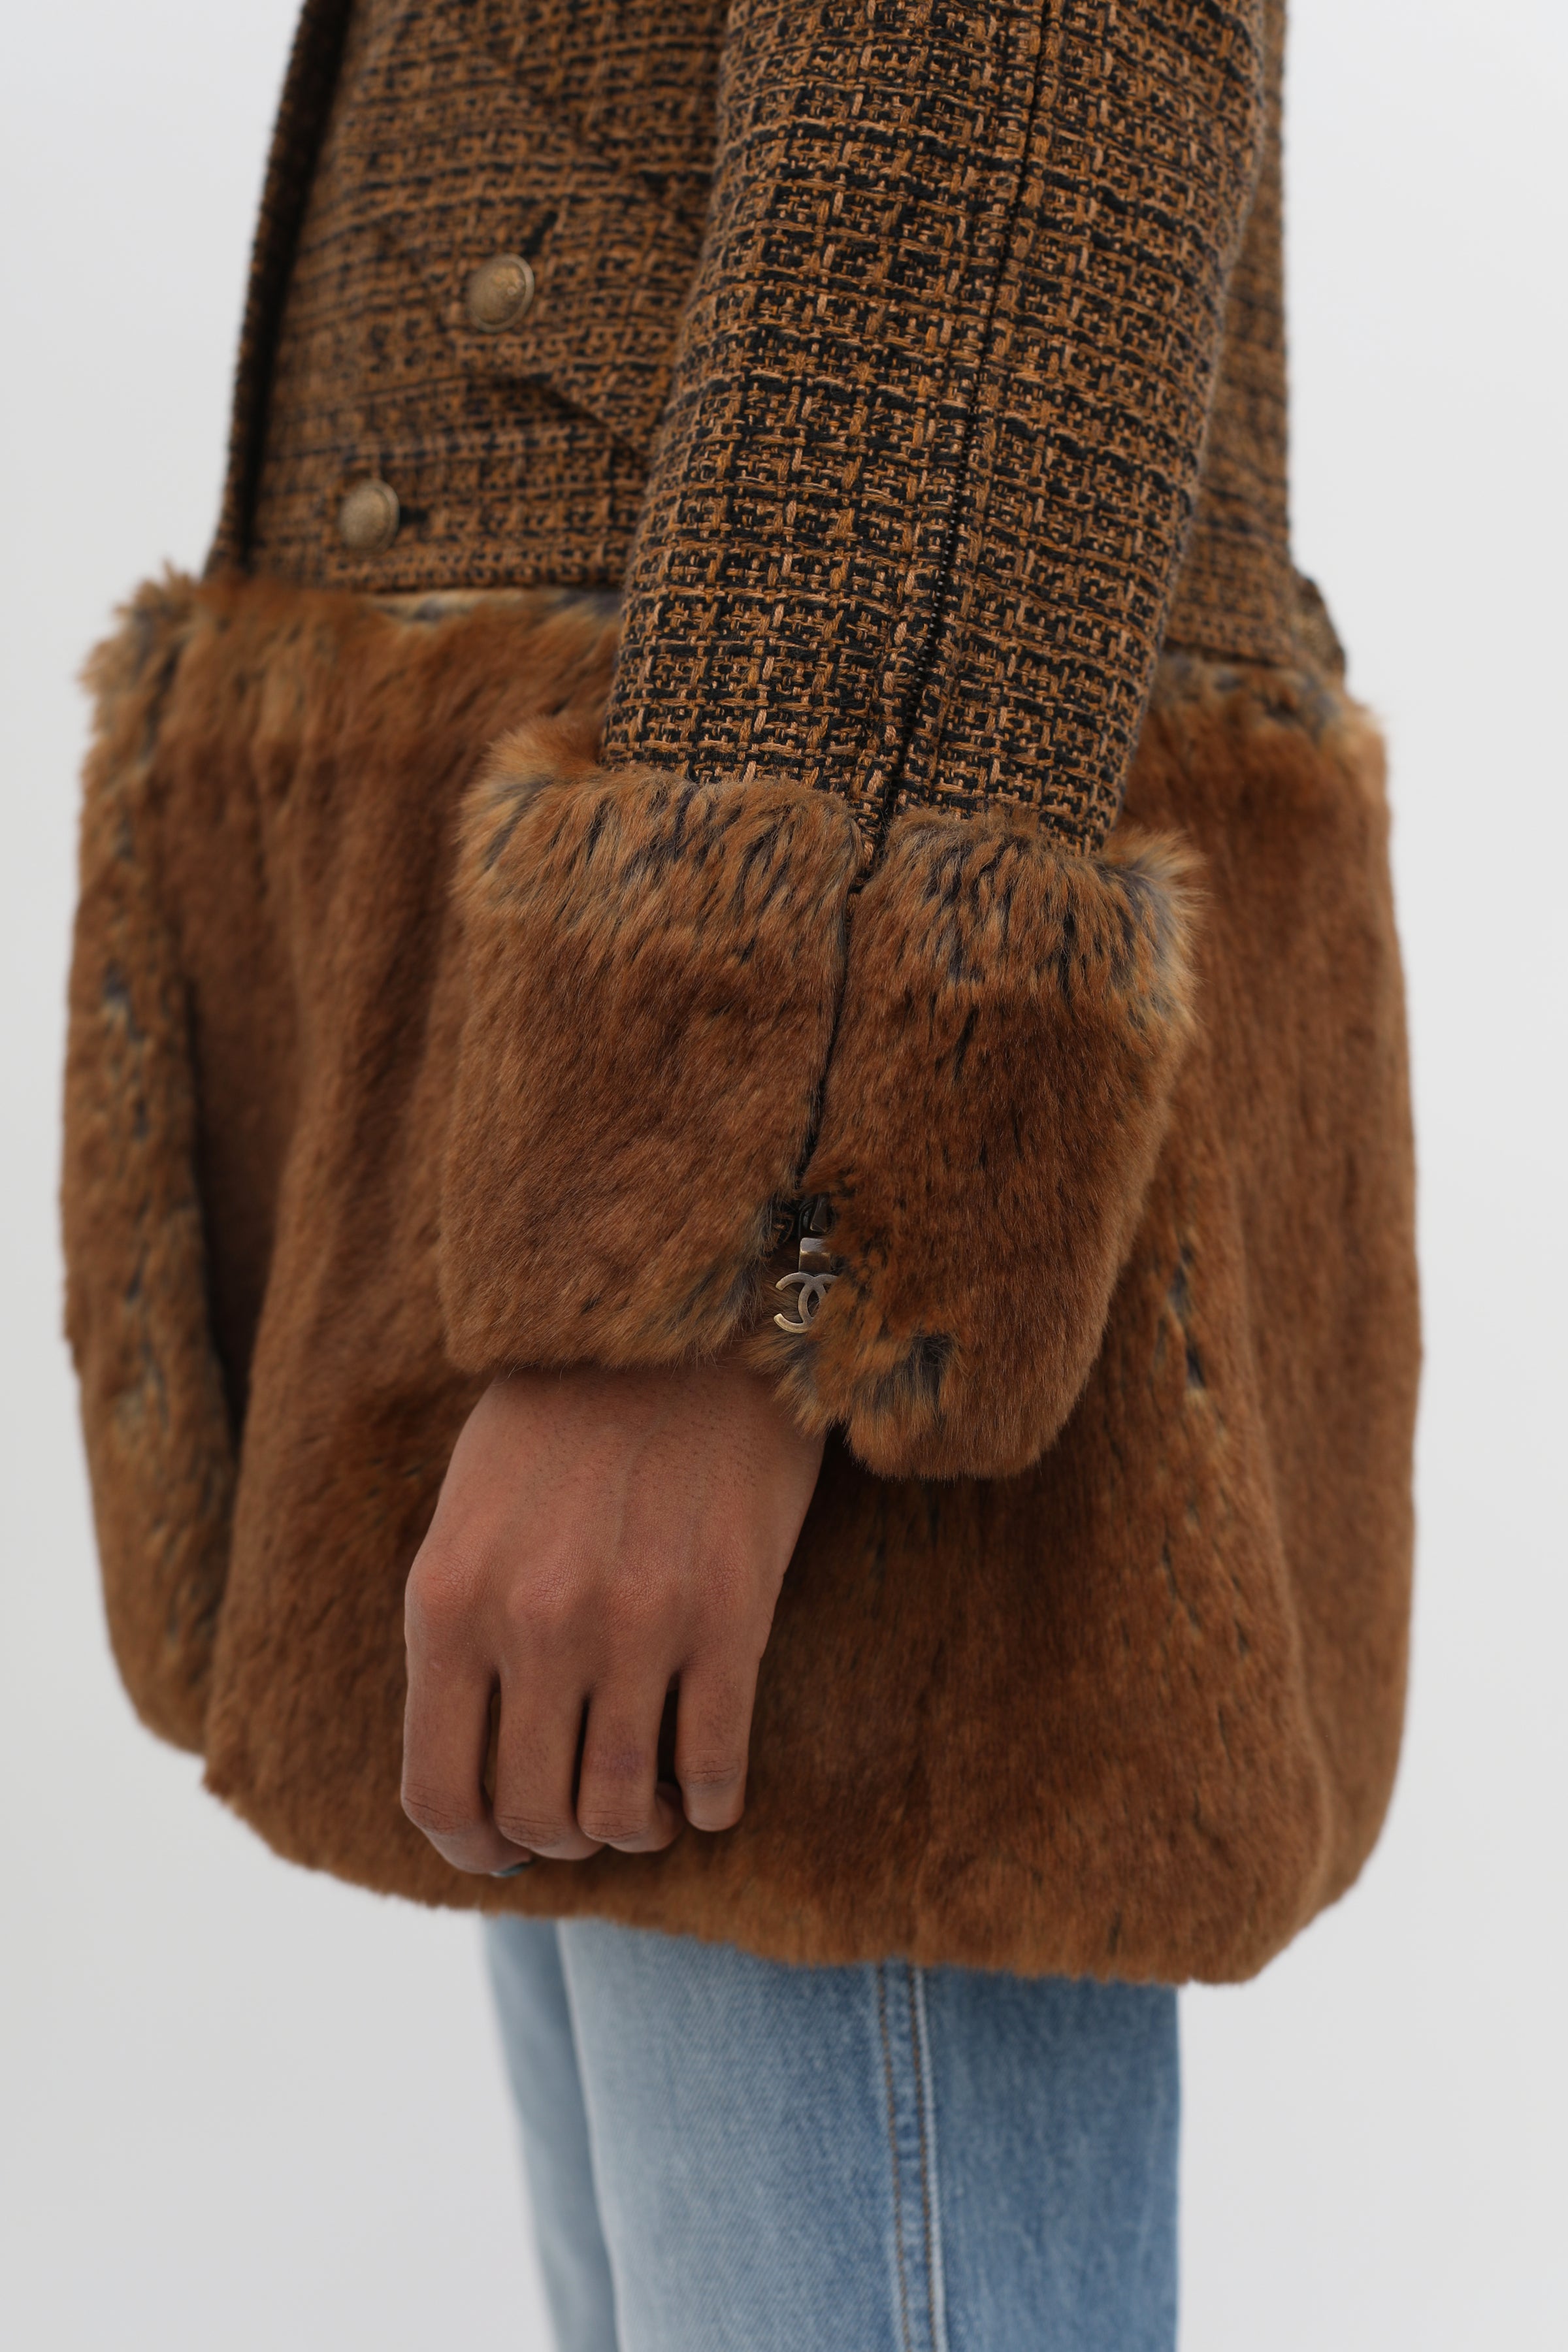 Chanel Runway/Editorial Faux Fur Jacket Fall/Winter 2018 Size 36FR